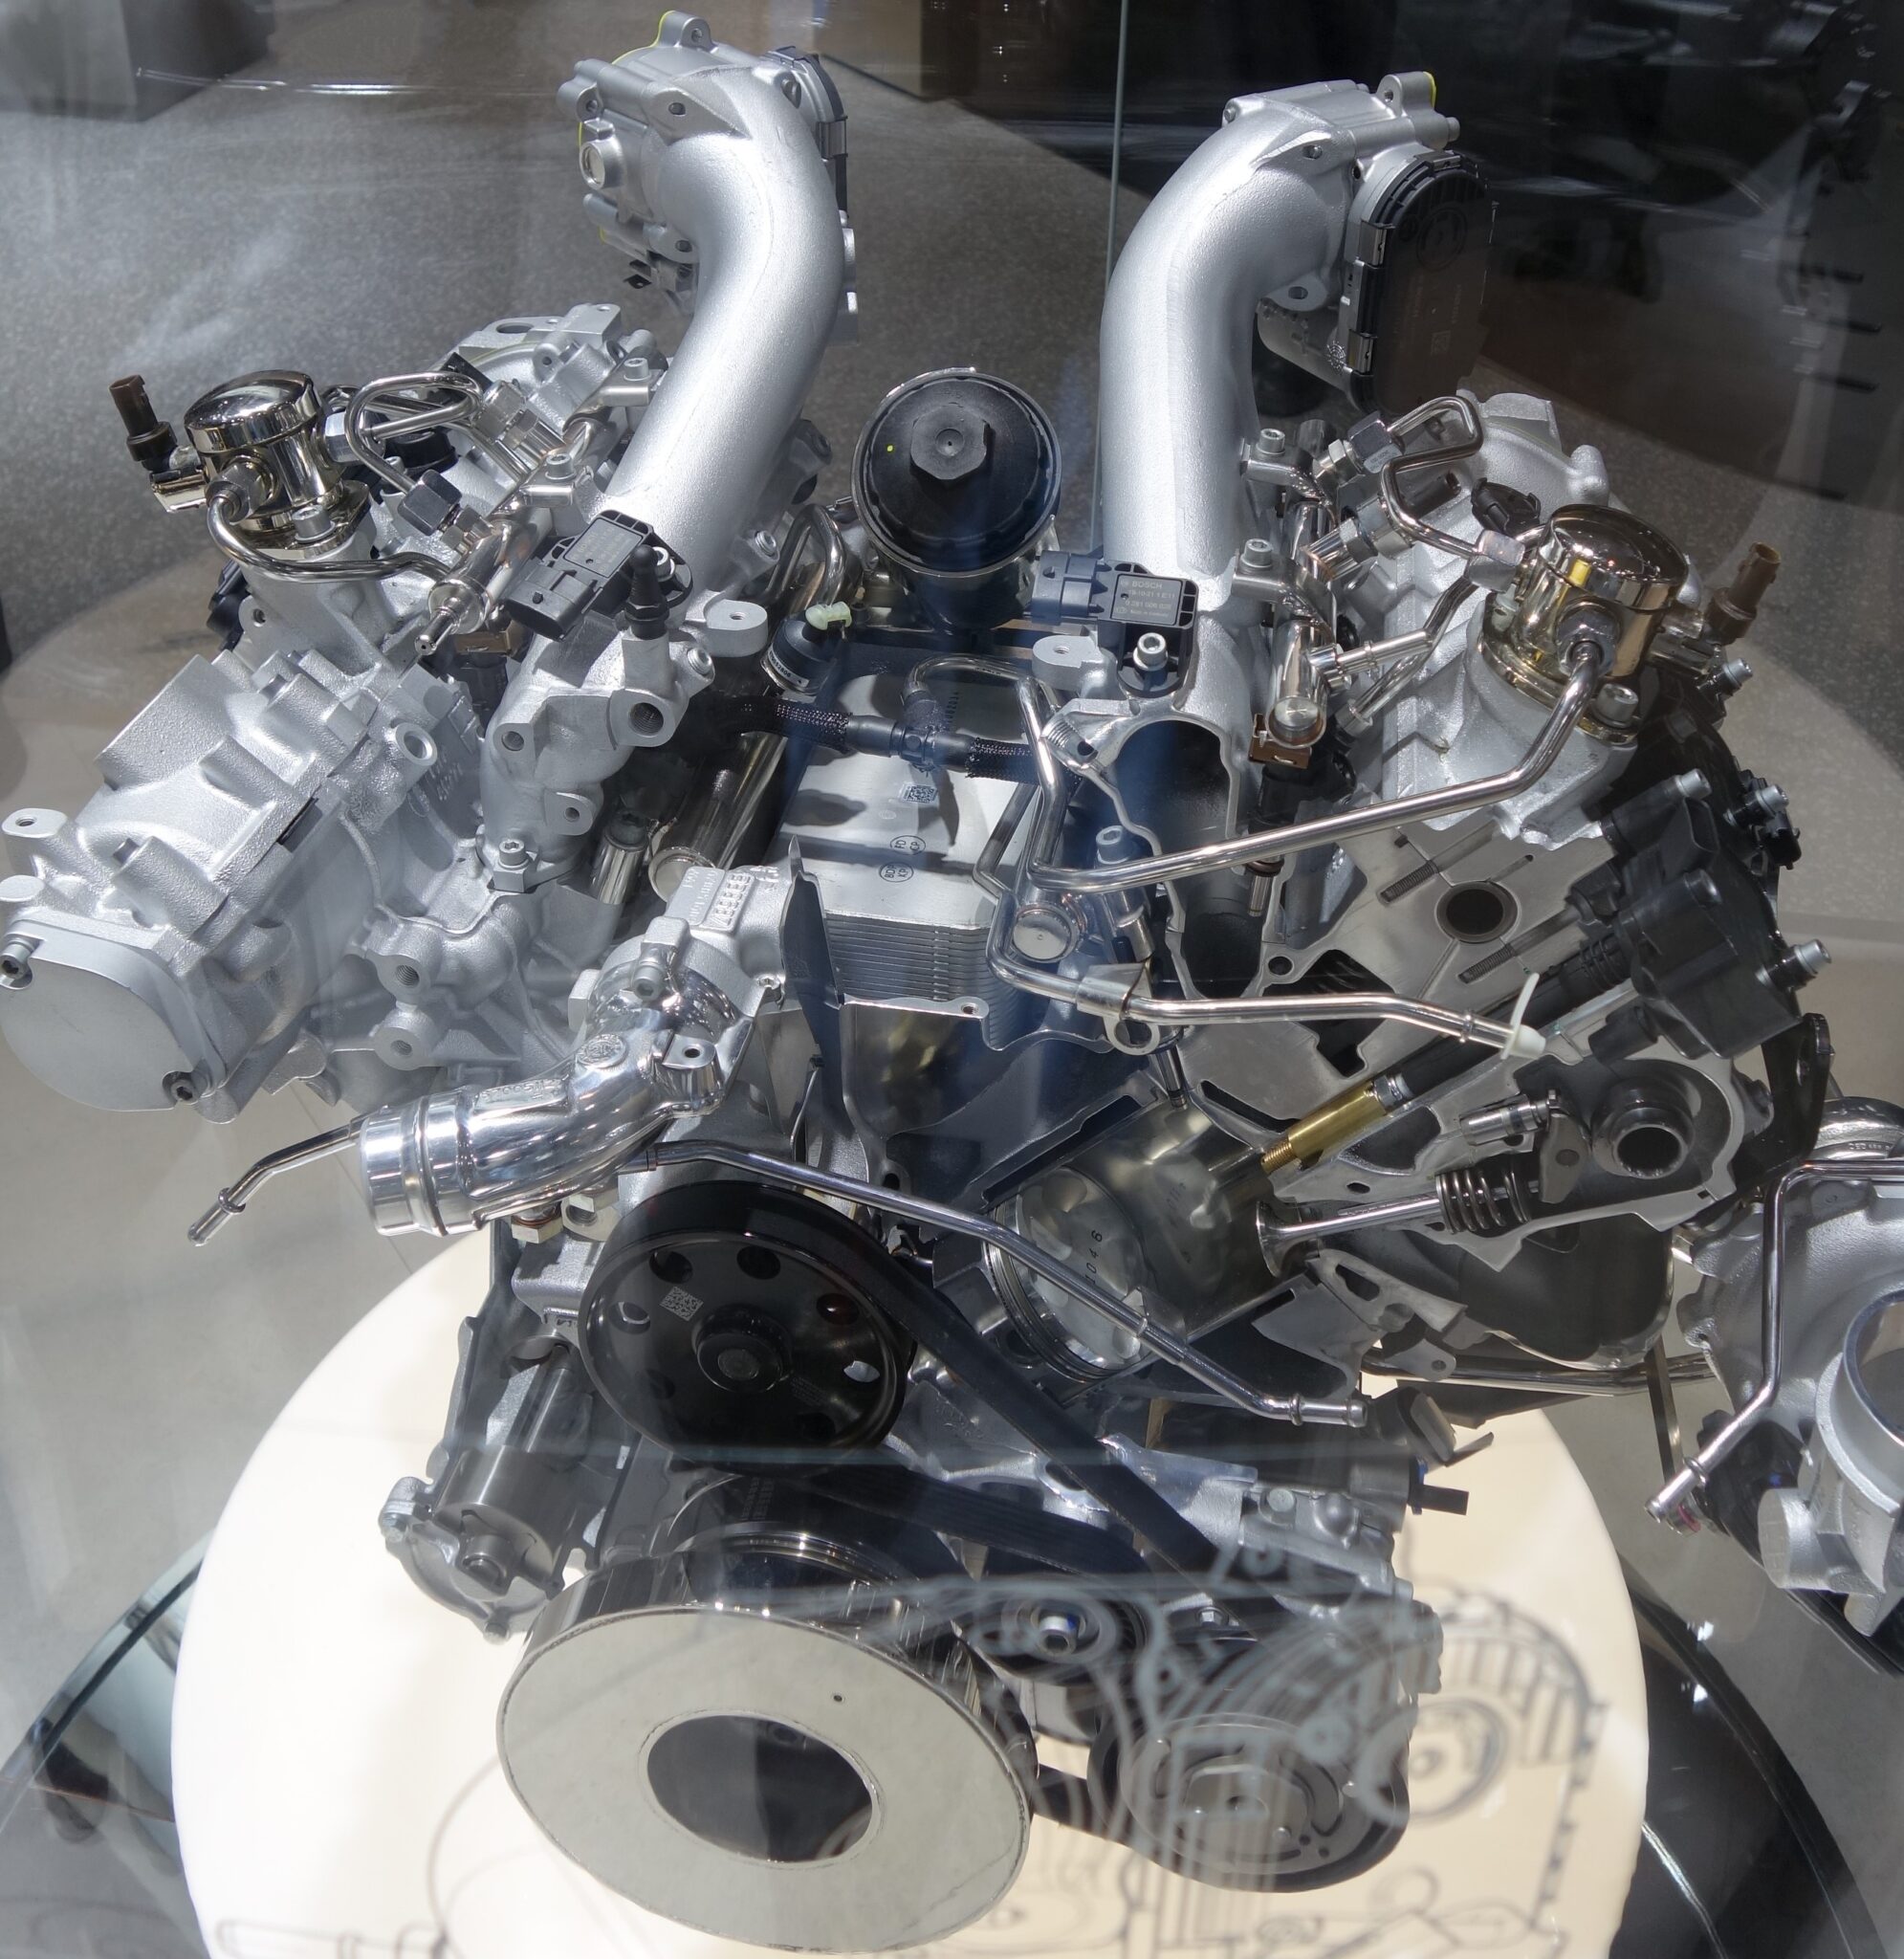 Maserati Nettuno V6 Engine Details | EHFCV